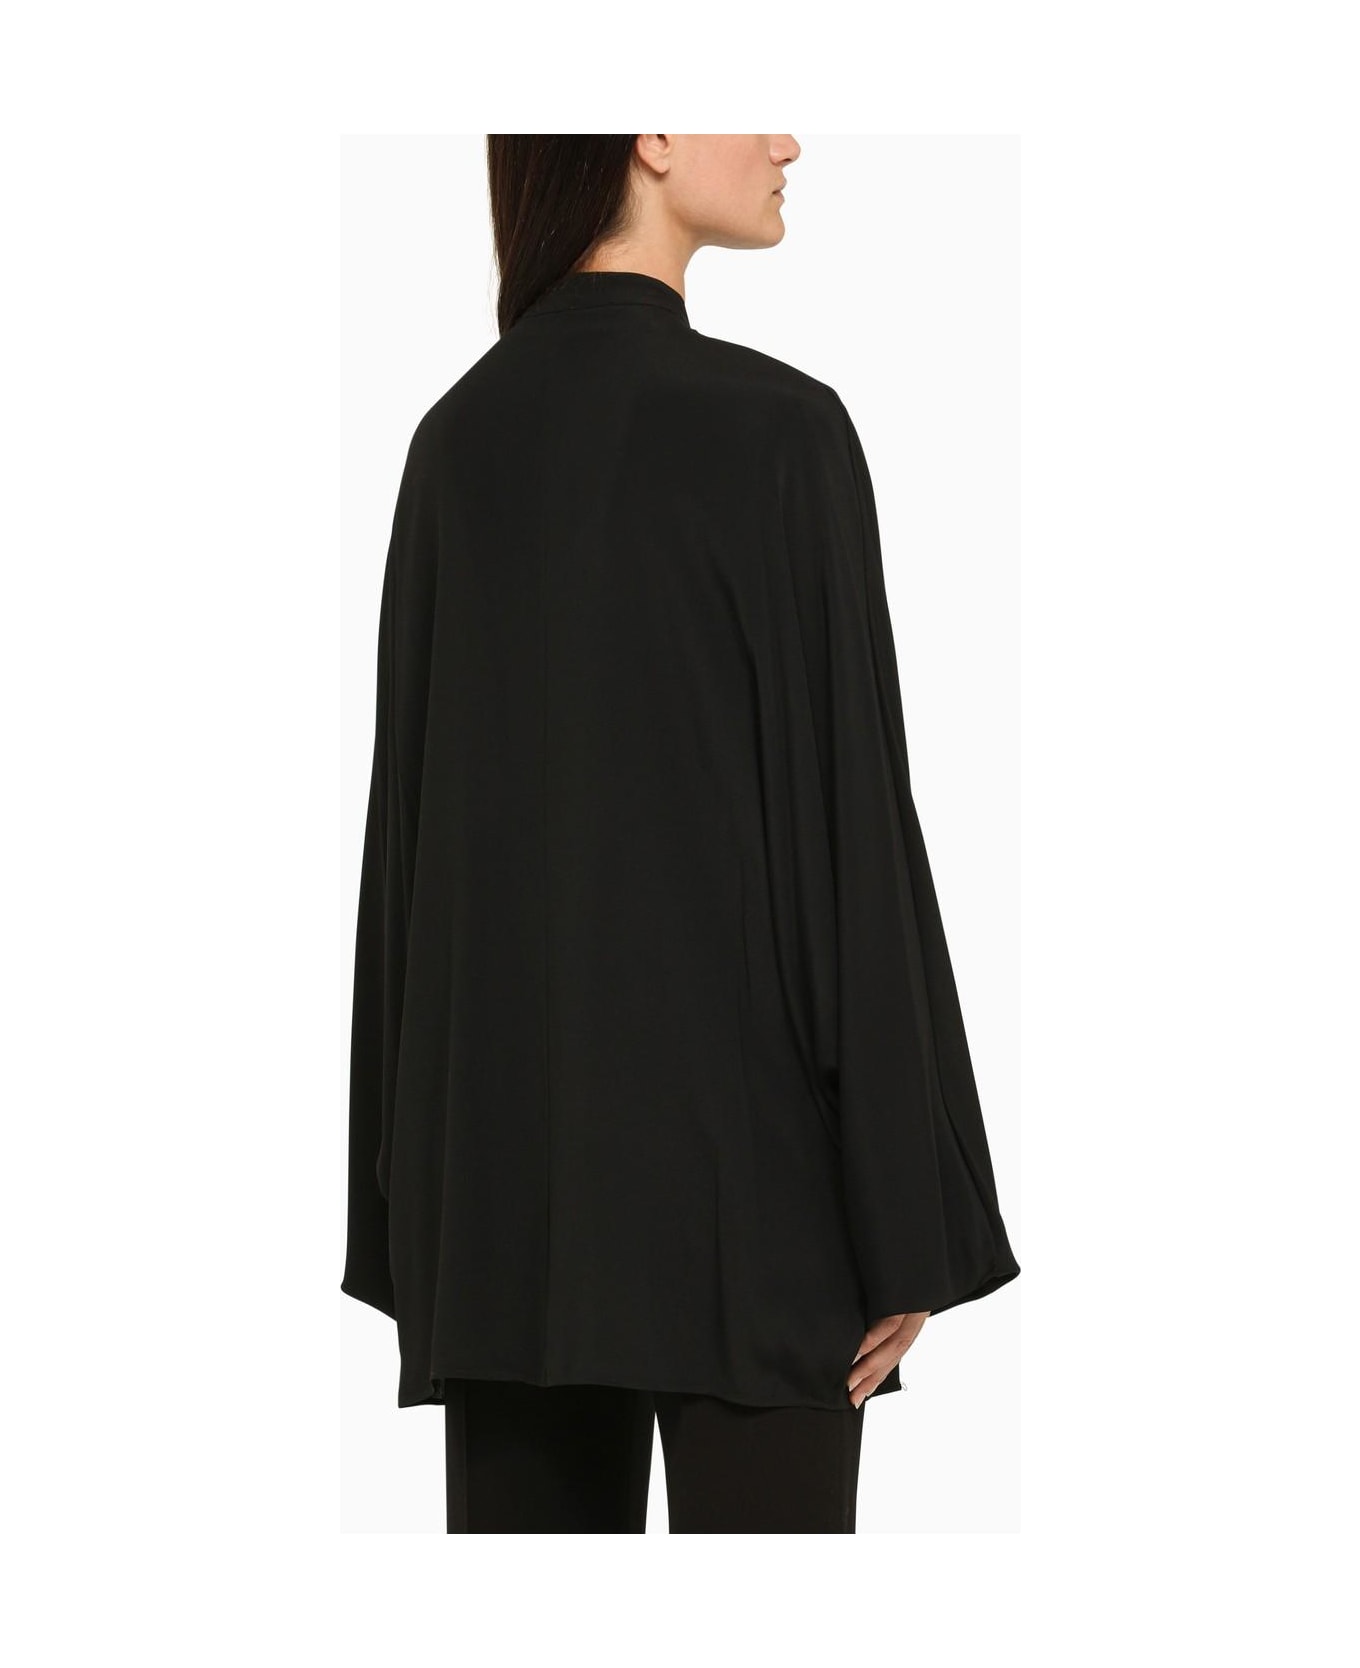 Federica Tosi Black Silk Blend Shirt - Black